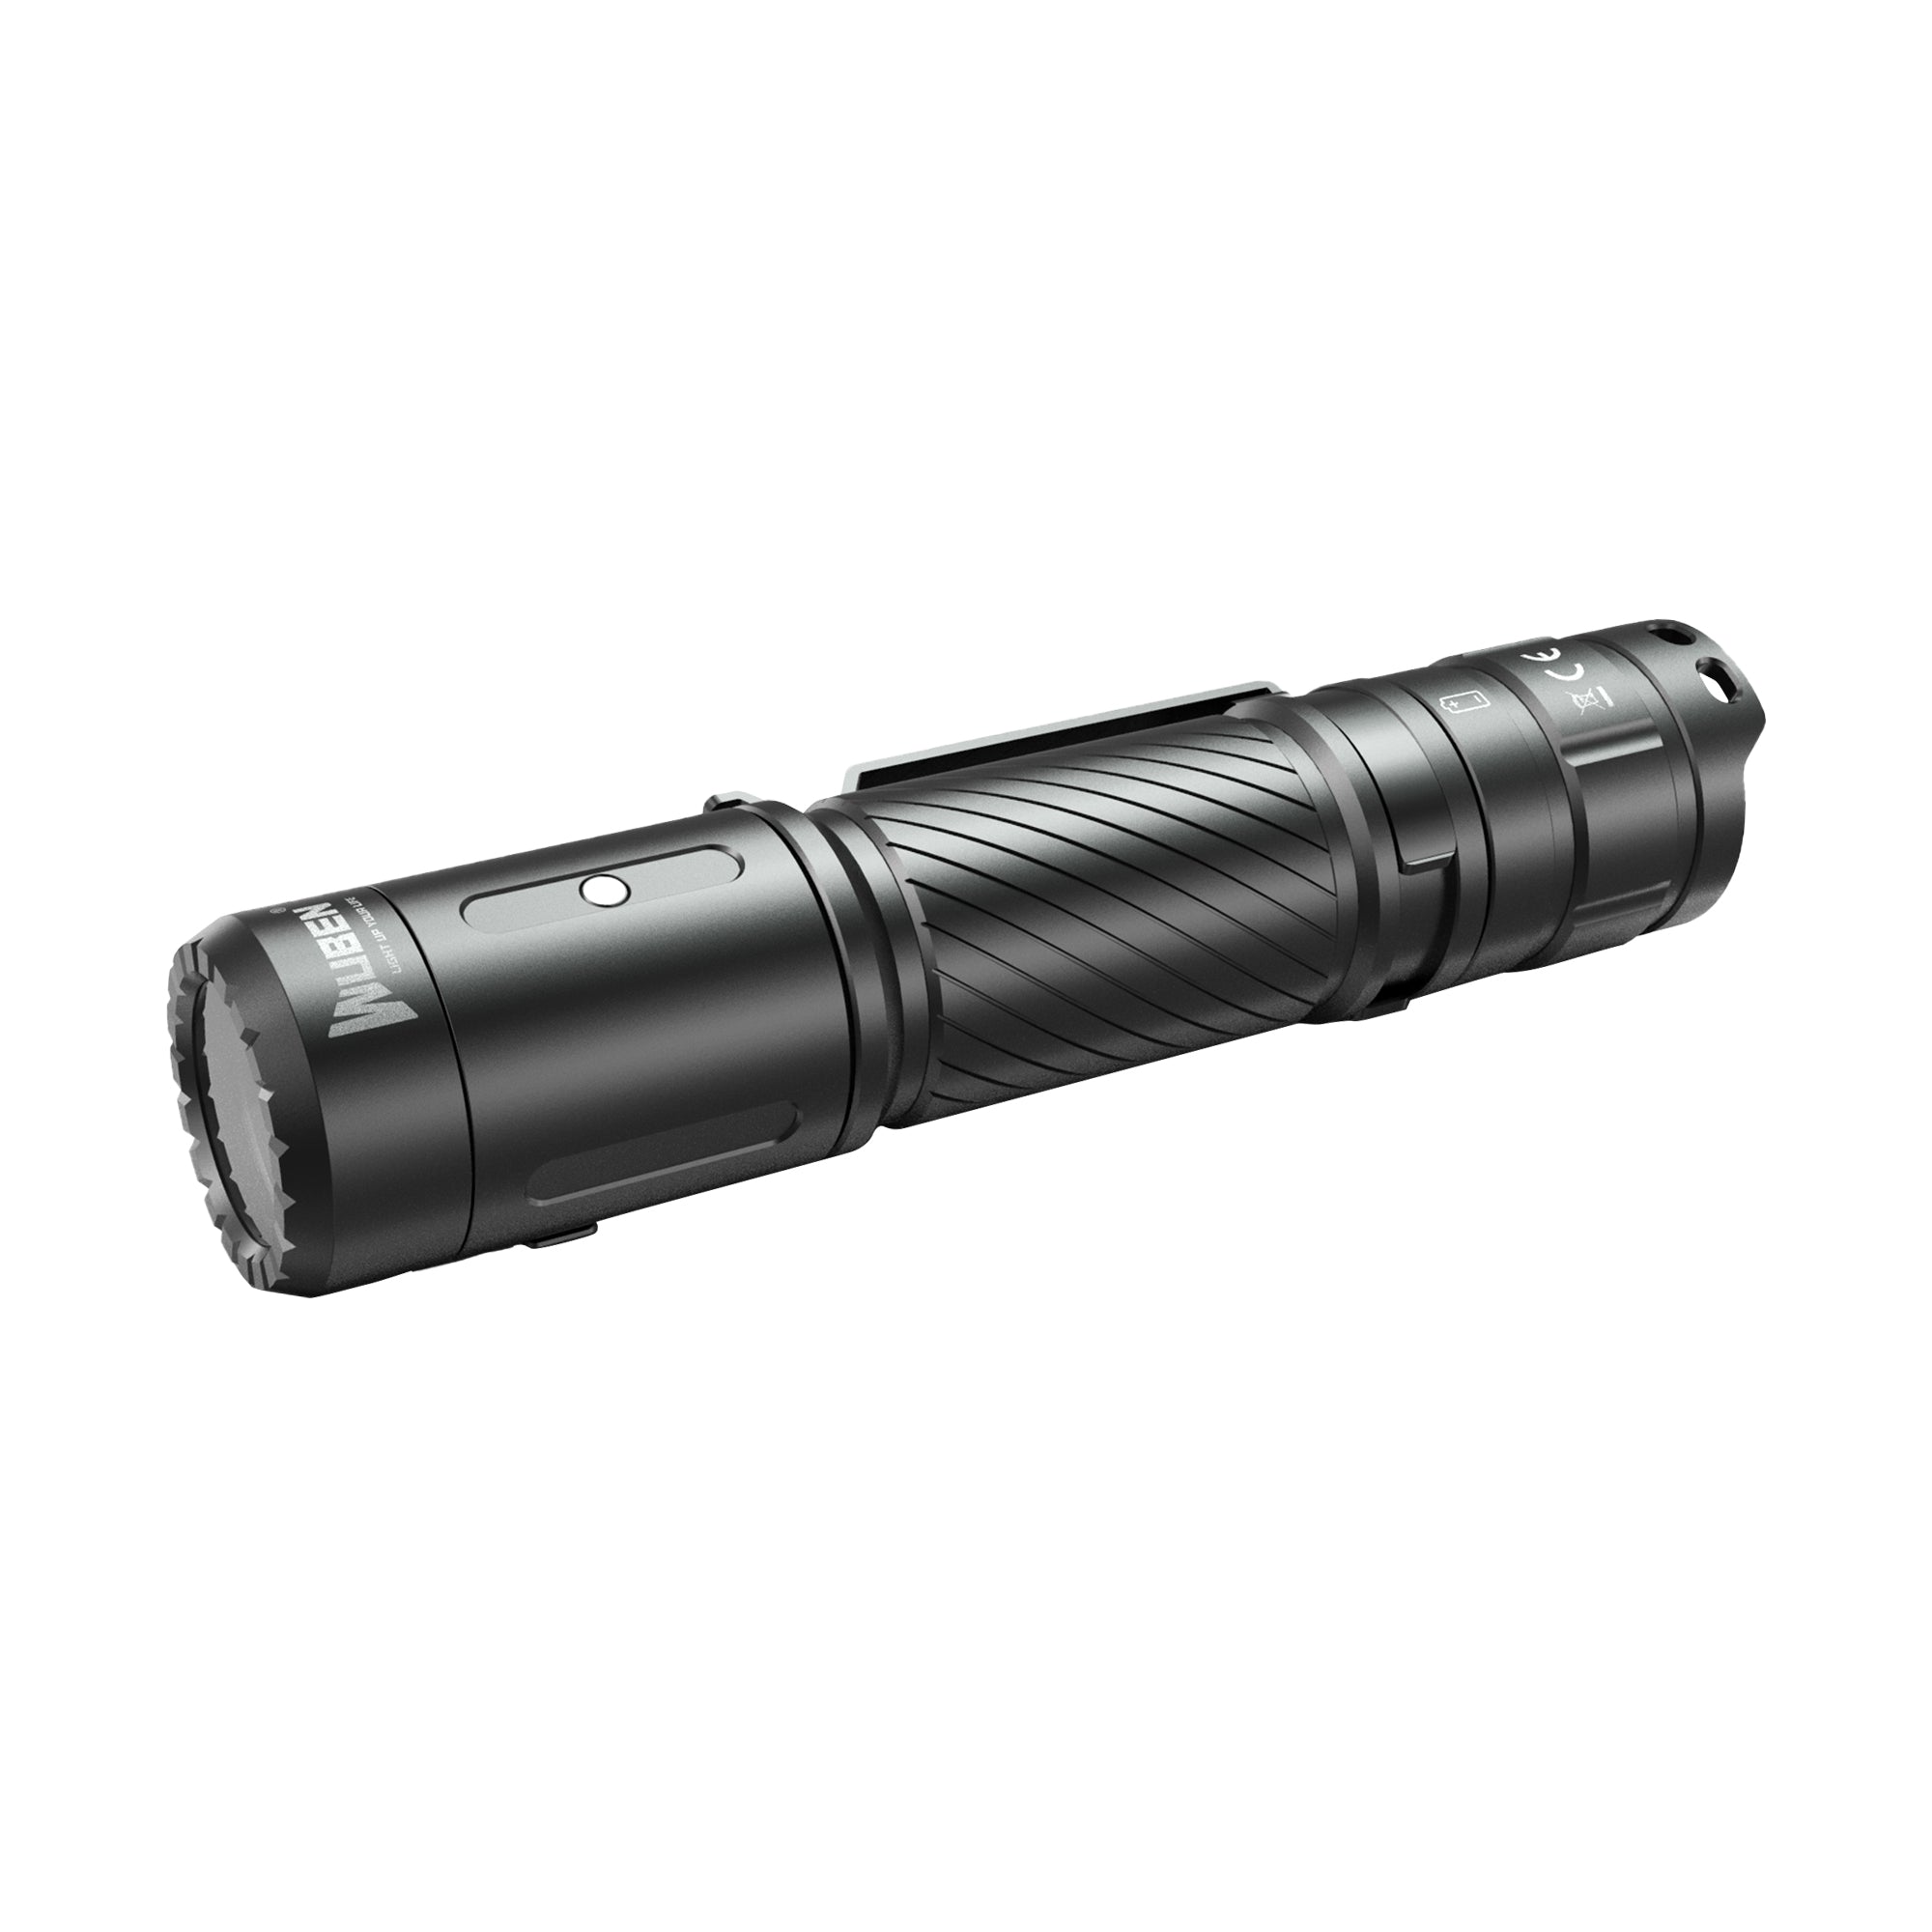 Wuben C3 1200 Lumen Flashlight High-Quality, Compact Light under 30